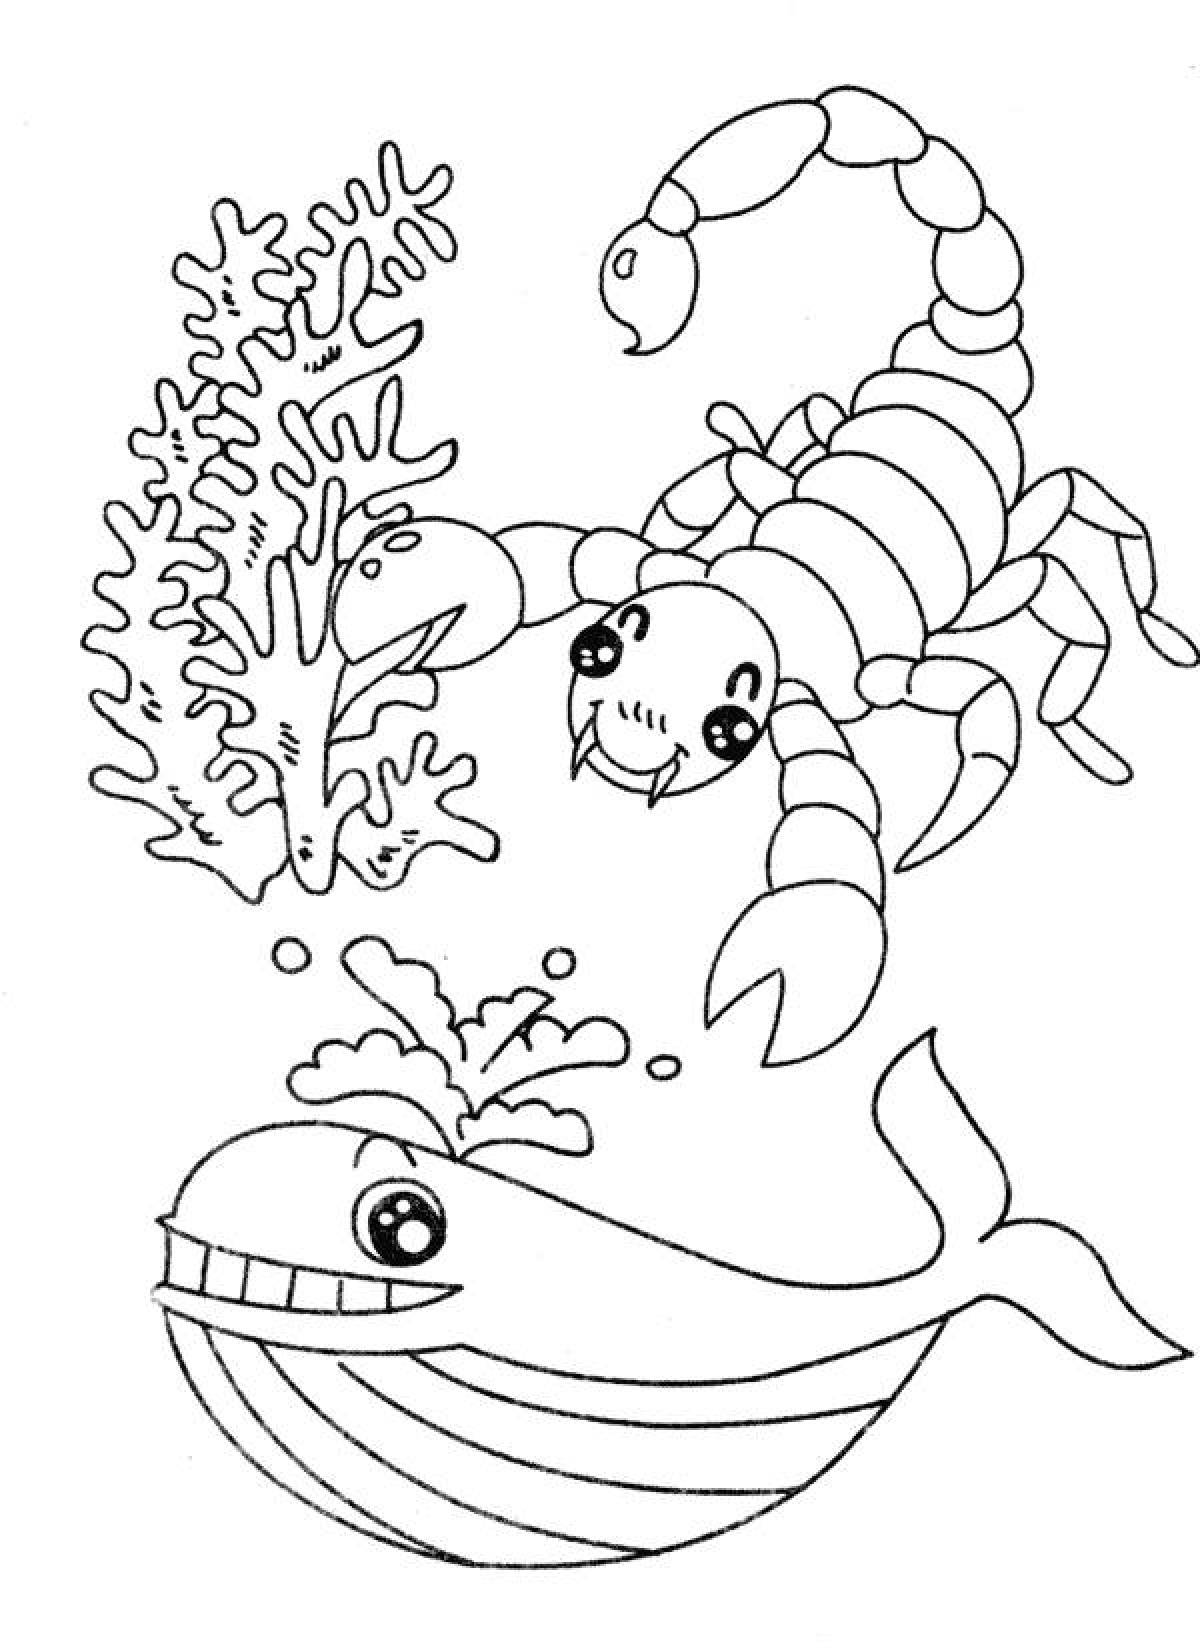 Shiny sea creatures coloring book